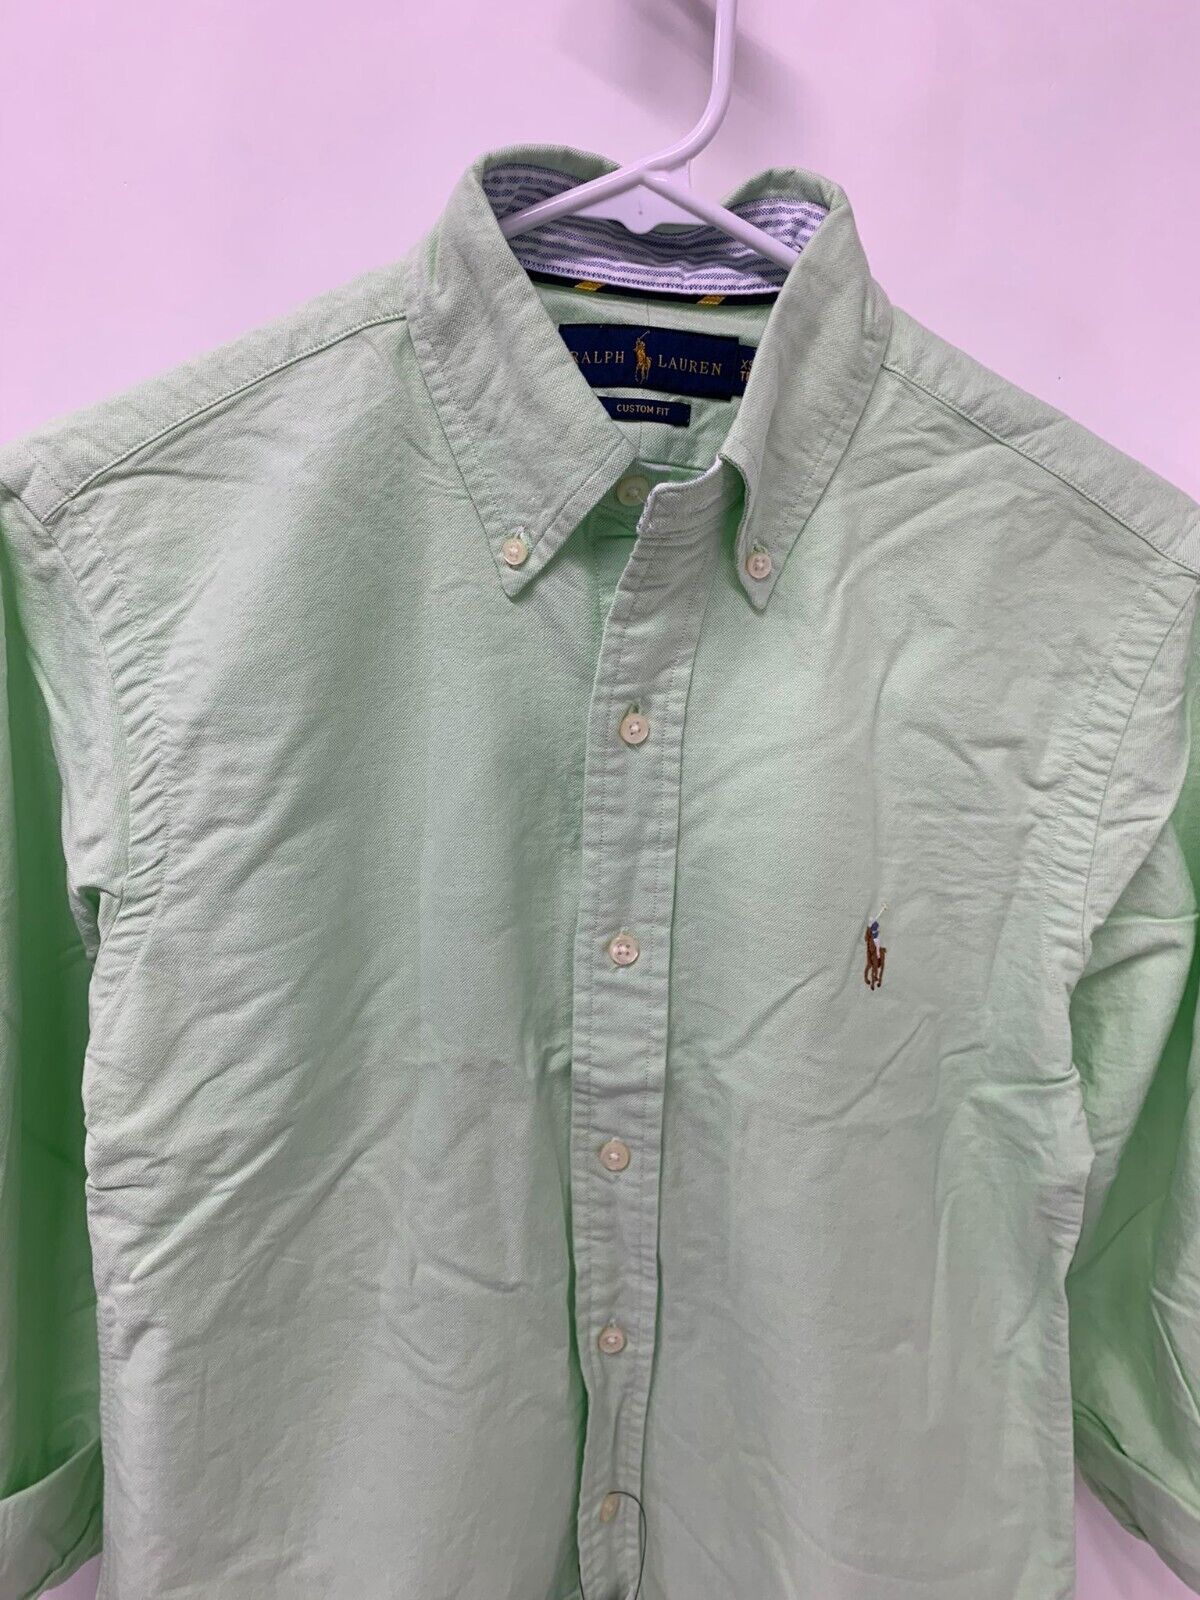 Ralph Lauren Mens XS Custom Fit Button Down Oxford Shirt Green Embroidered